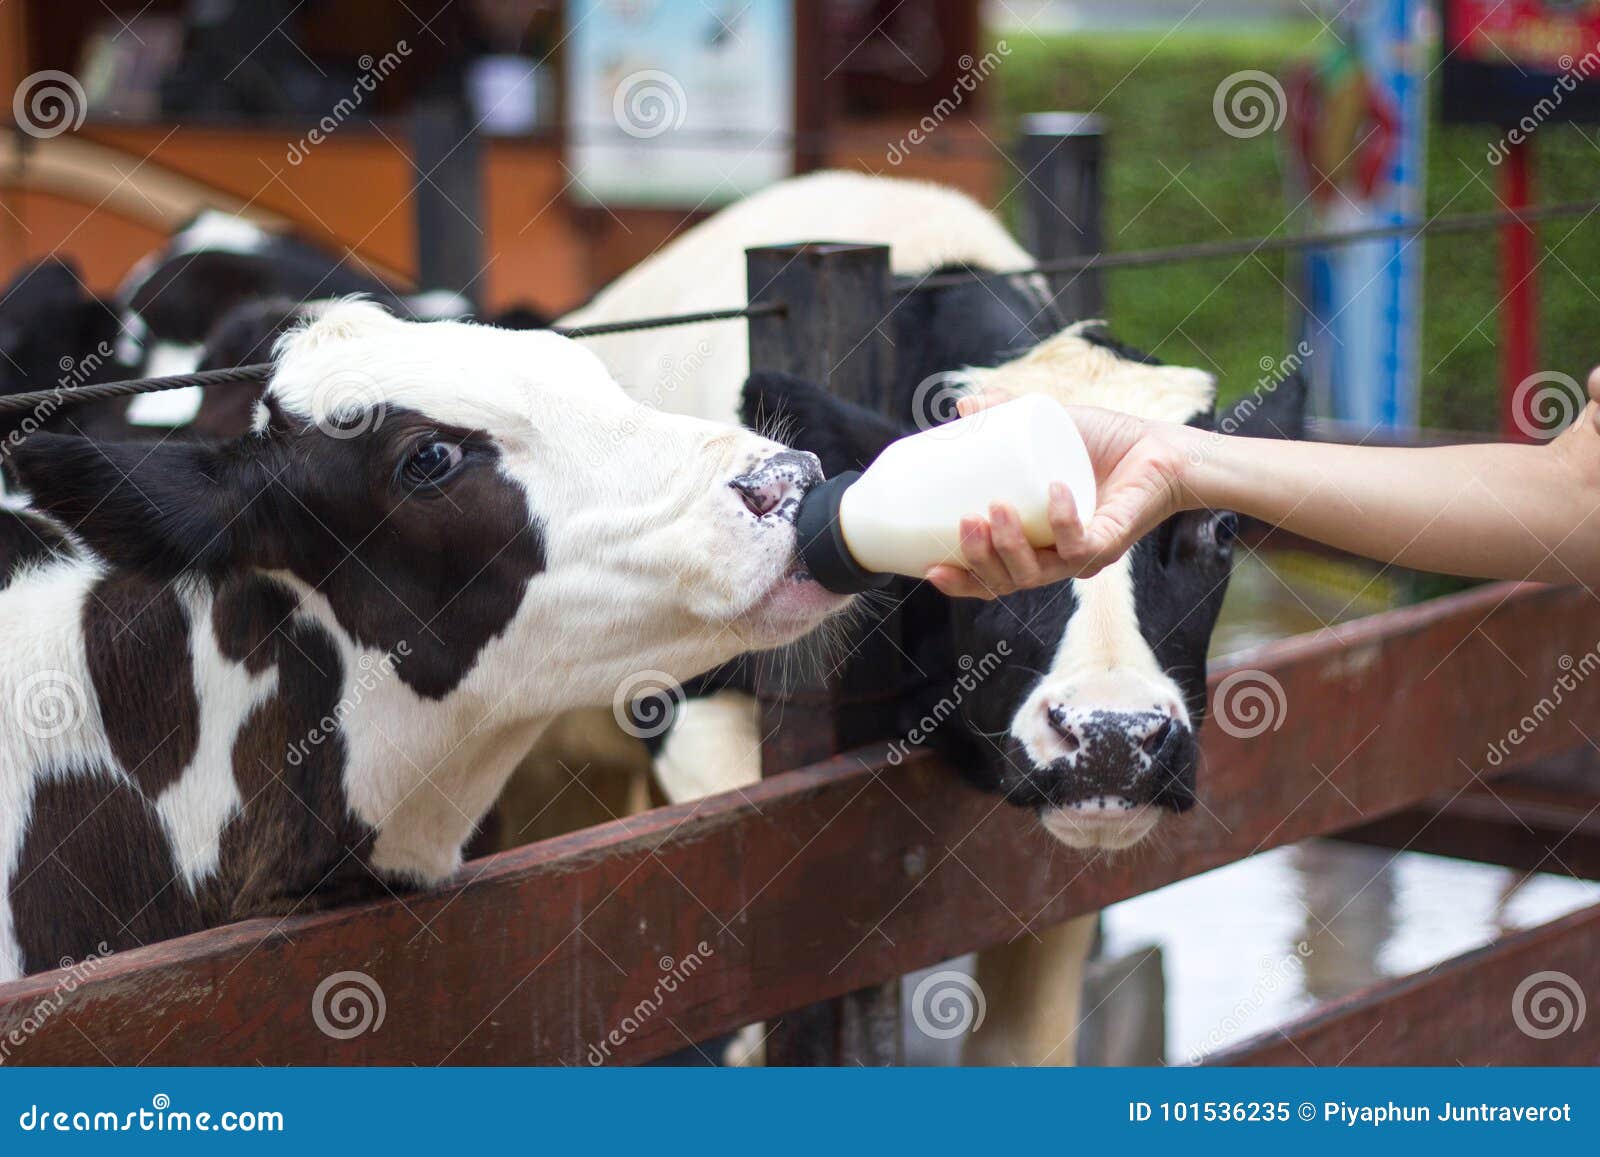 Baby Cow Feeding On Milk Bottle Stock Image - Image of ...